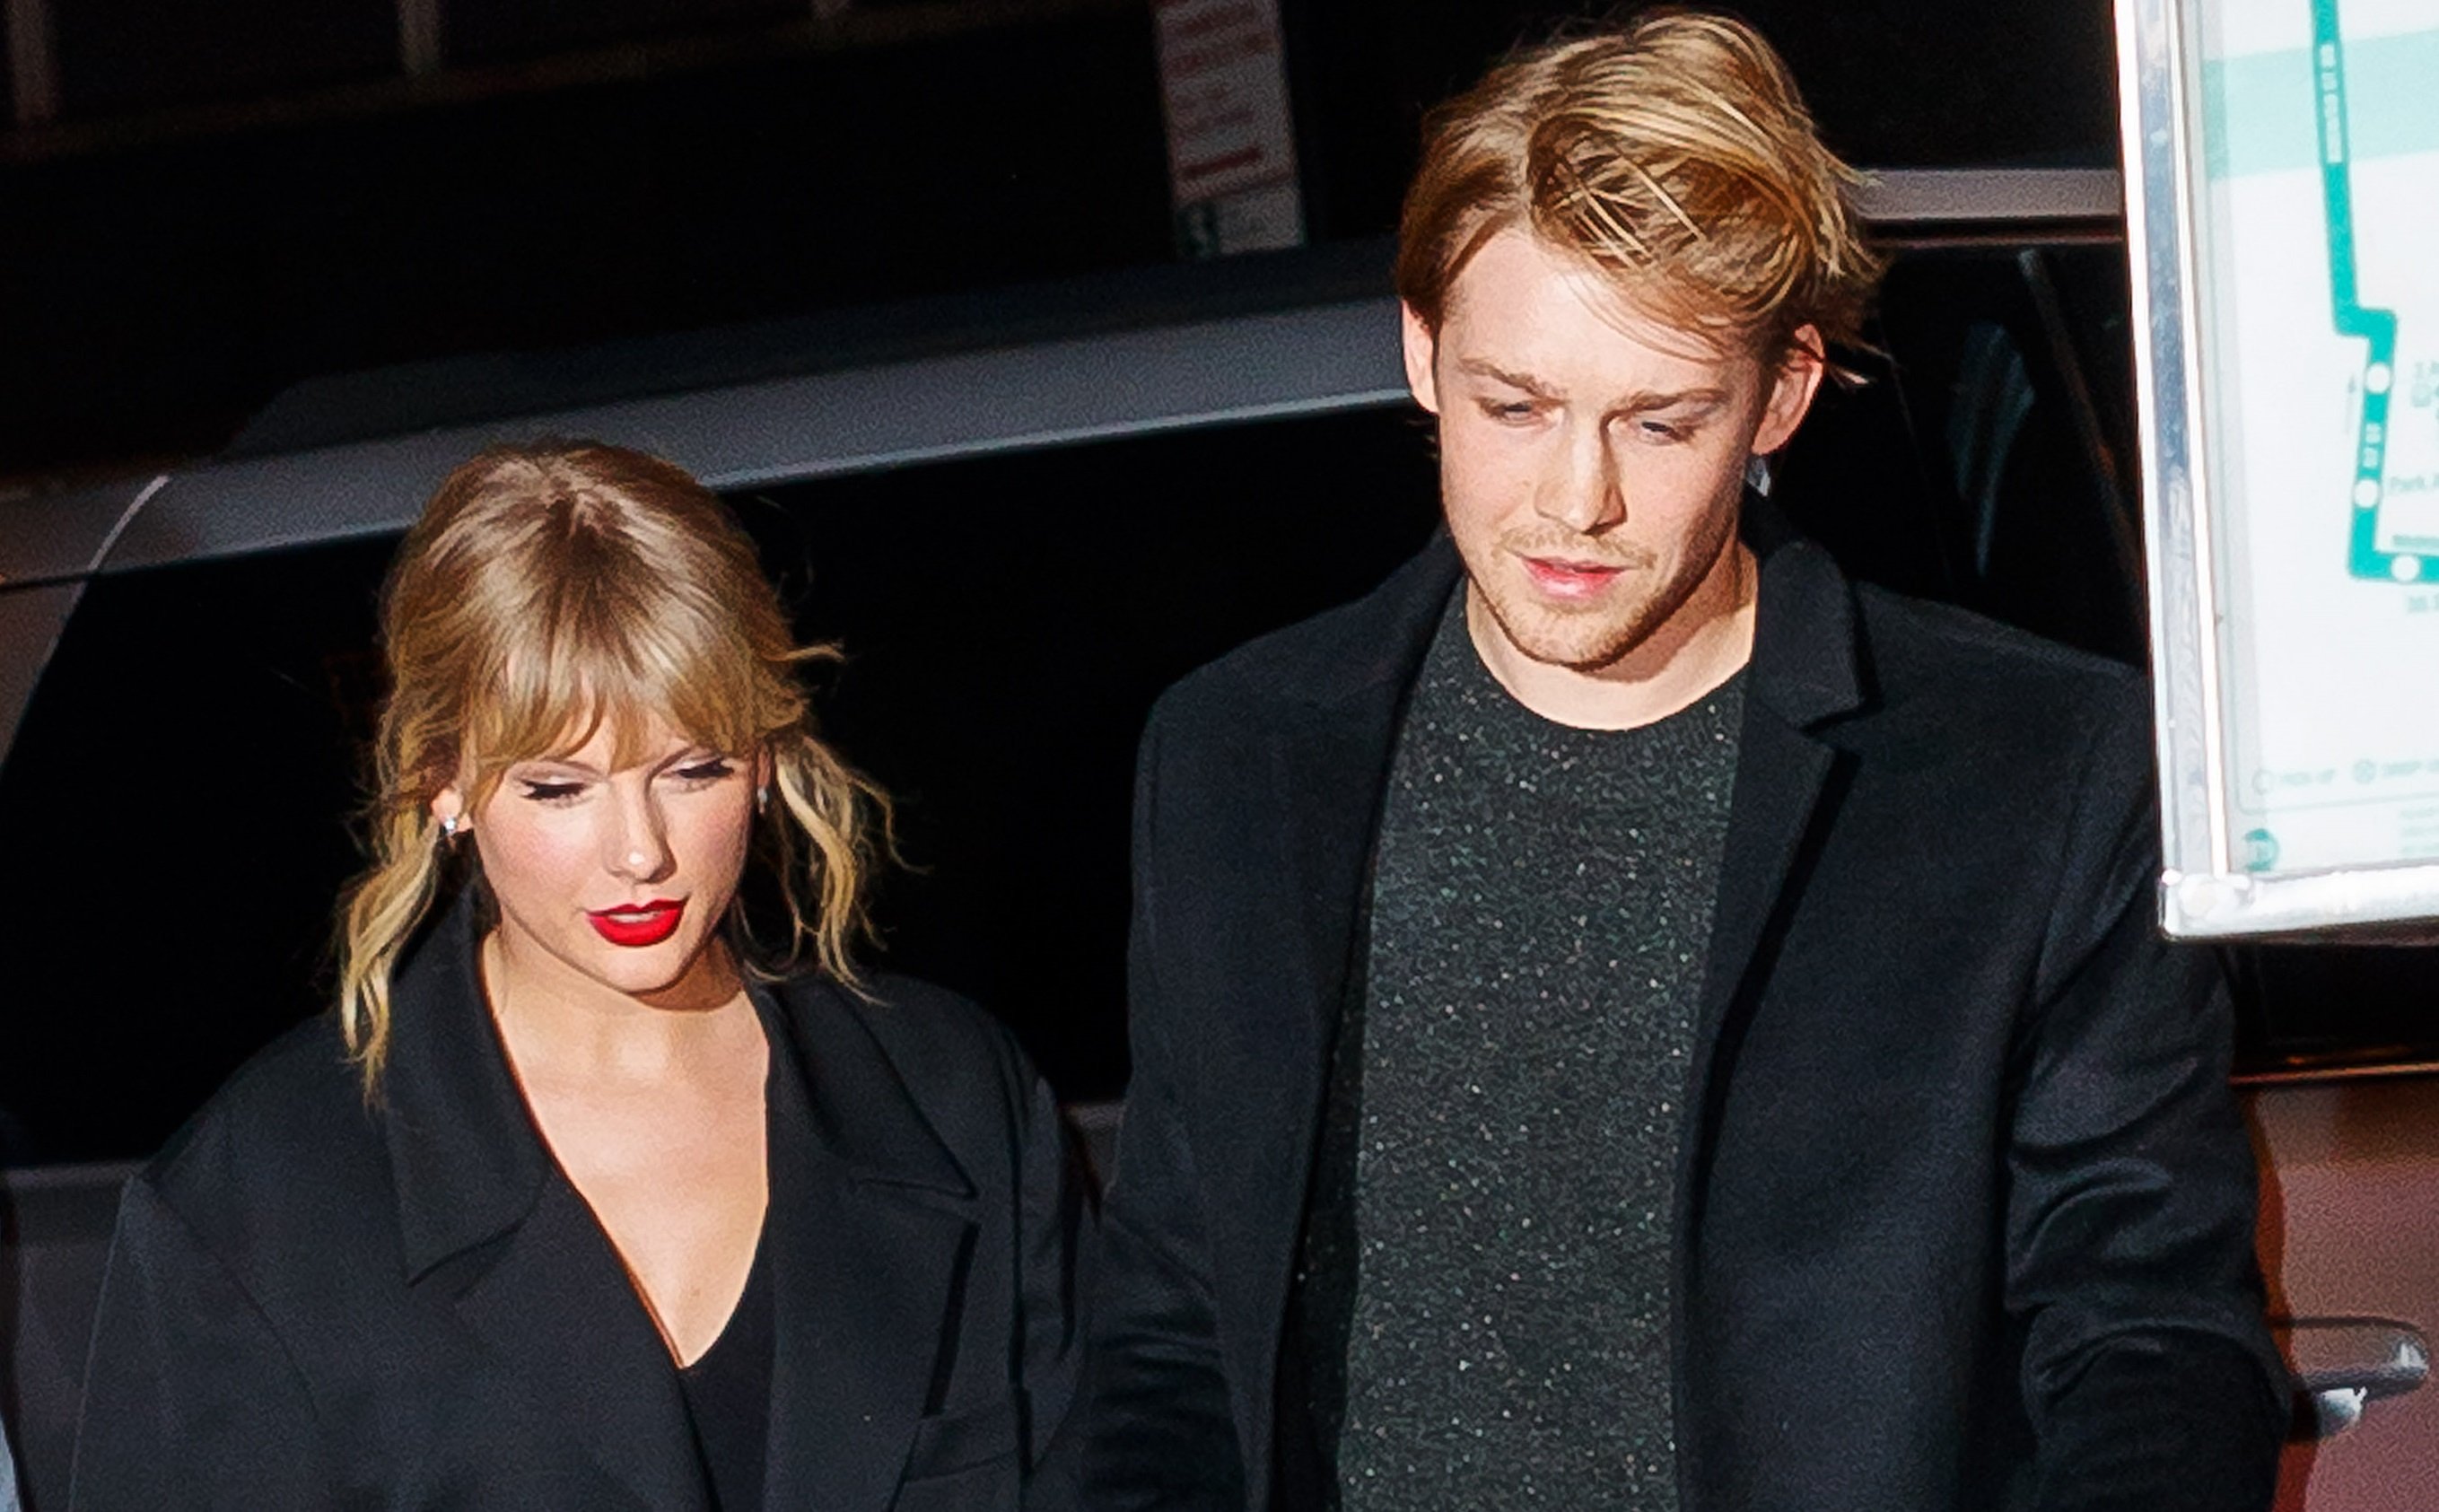 Taylor Swift and Joe Alwyn walking together in 2019